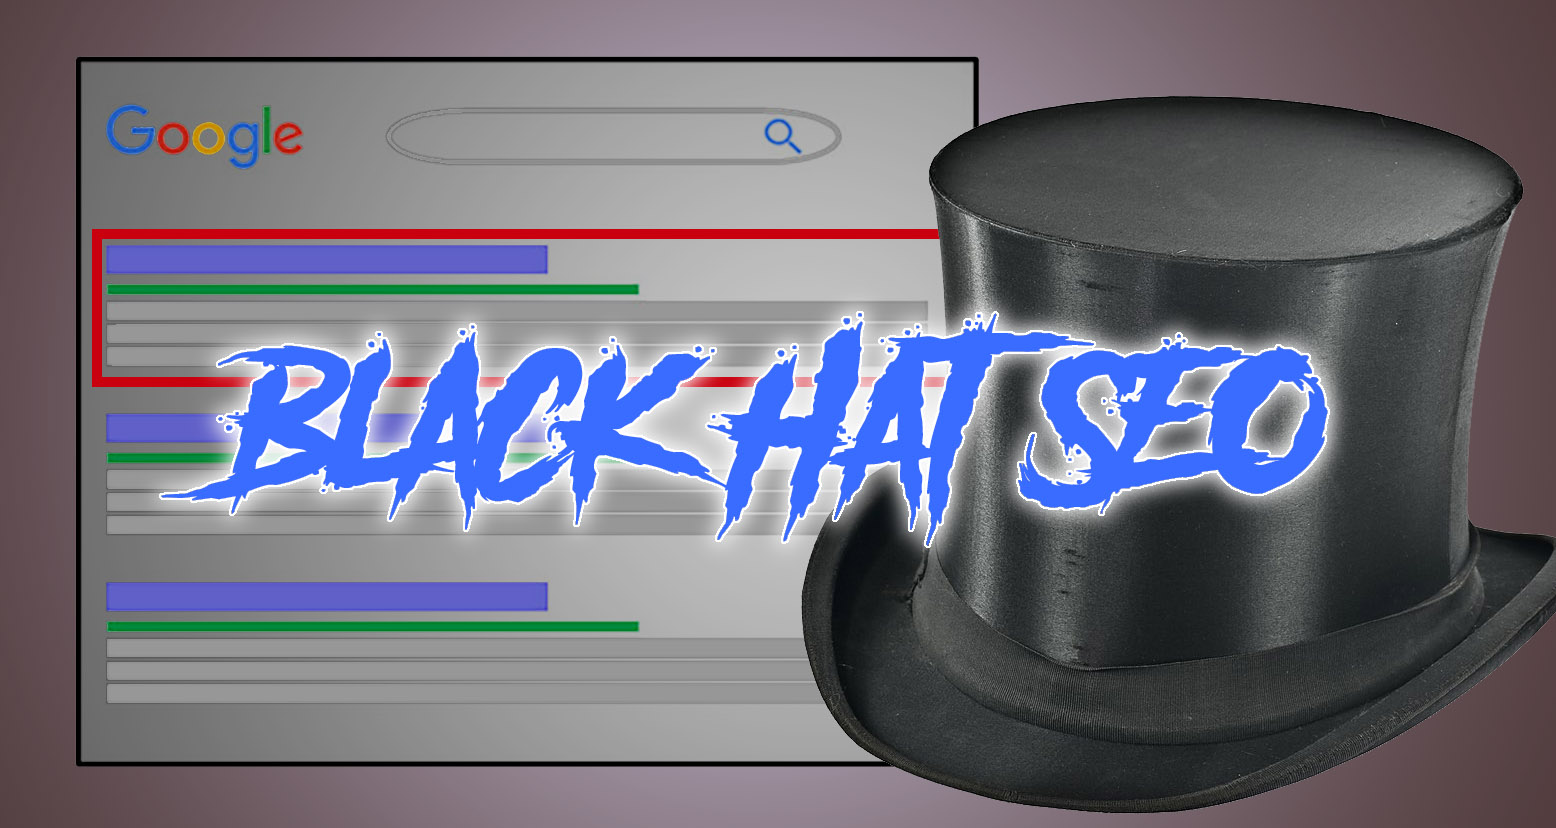 Black Hat SEO in Online Trademark Infringement Lawsuits